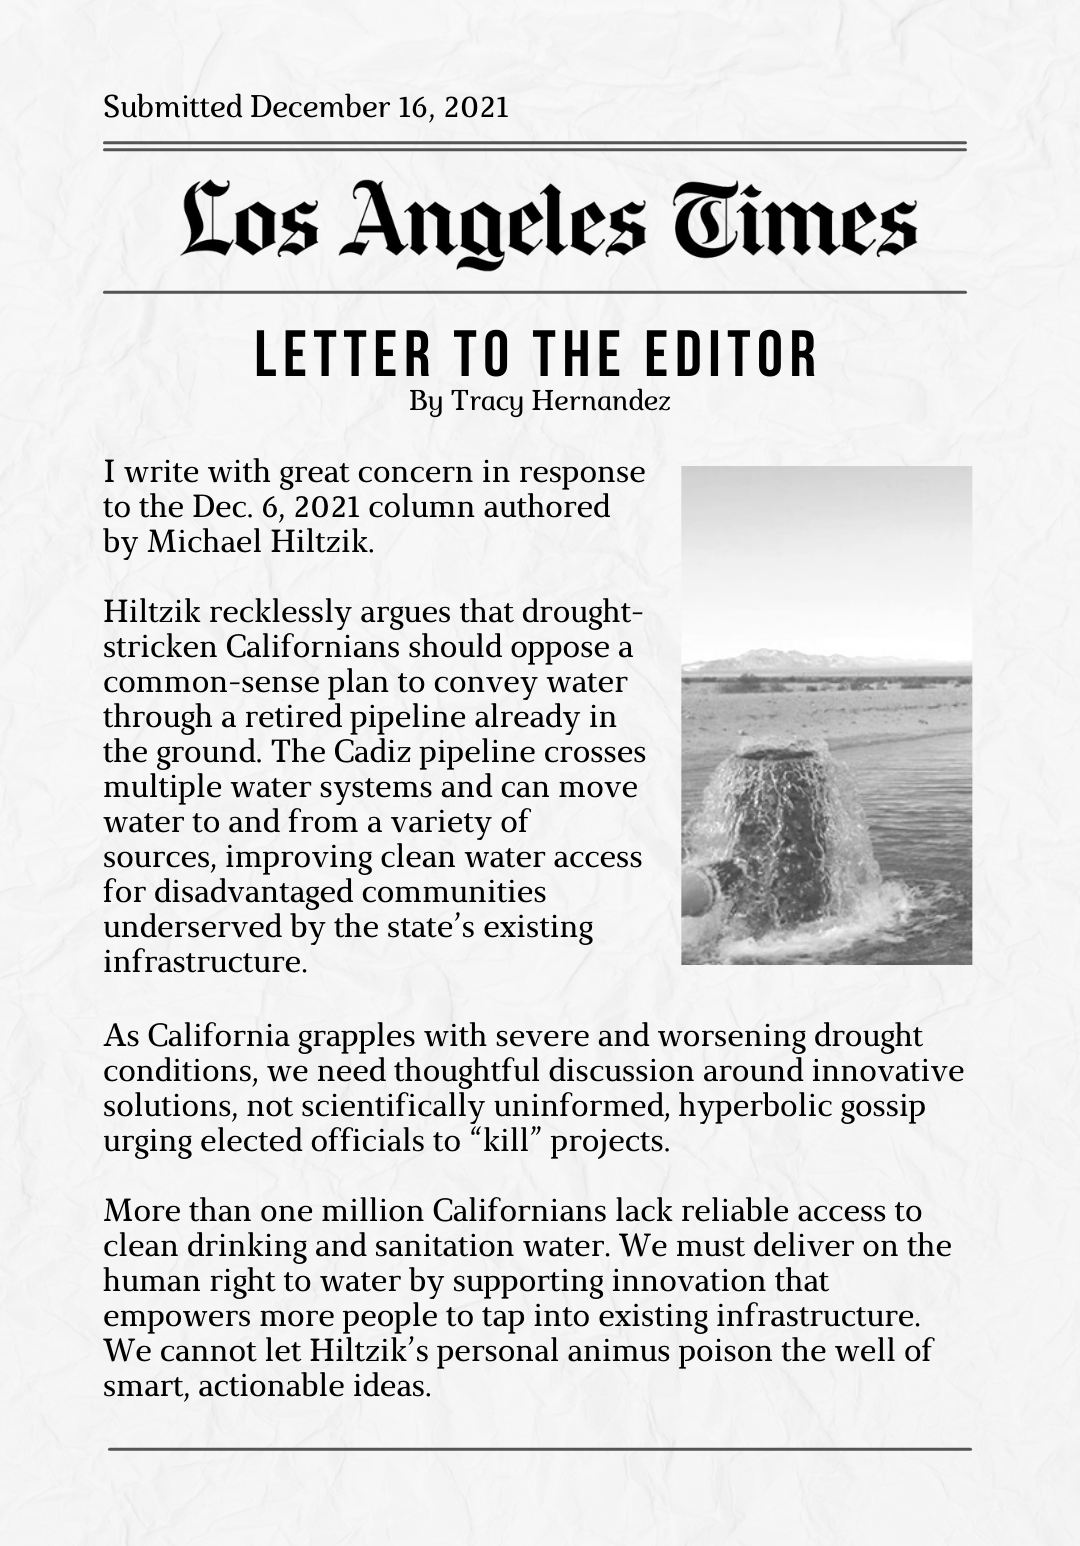 BizFed responds to LATimes column attacking Cadiz Water Project